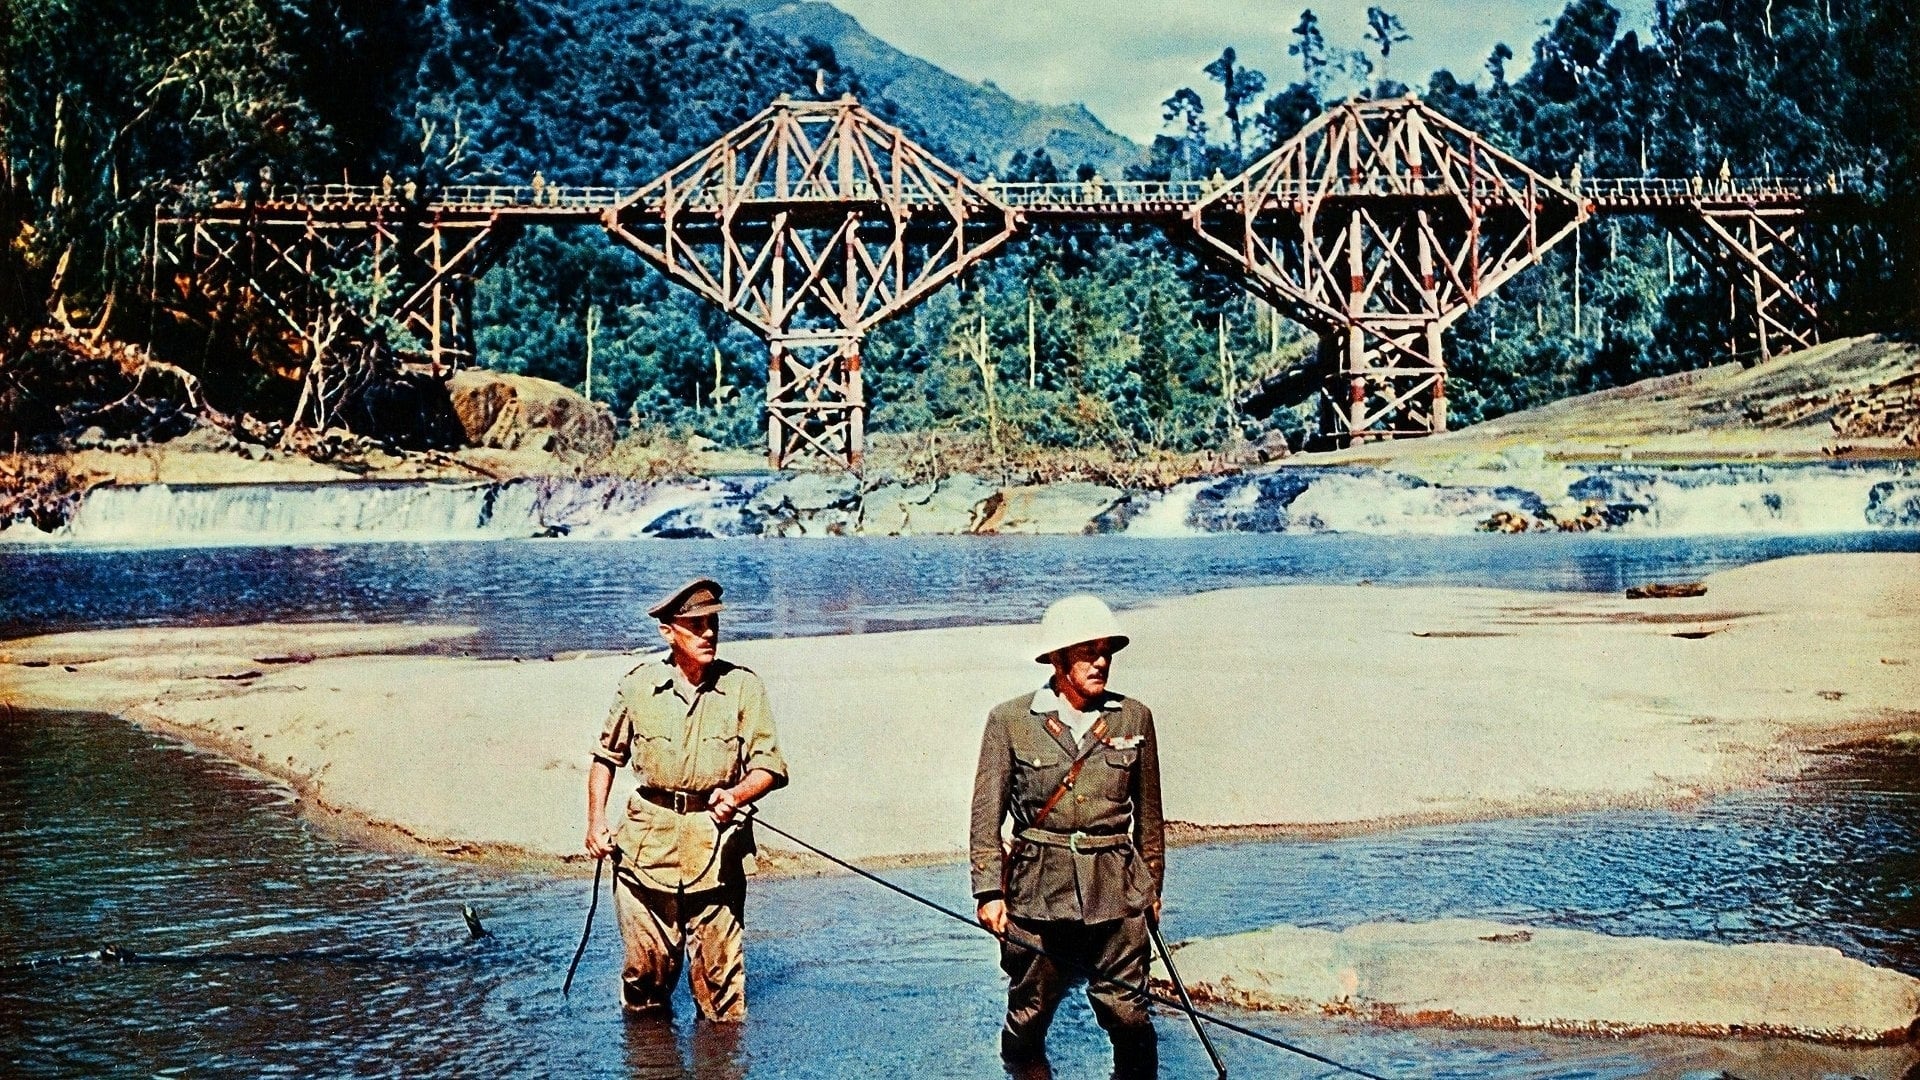 Kwai Köprüsü